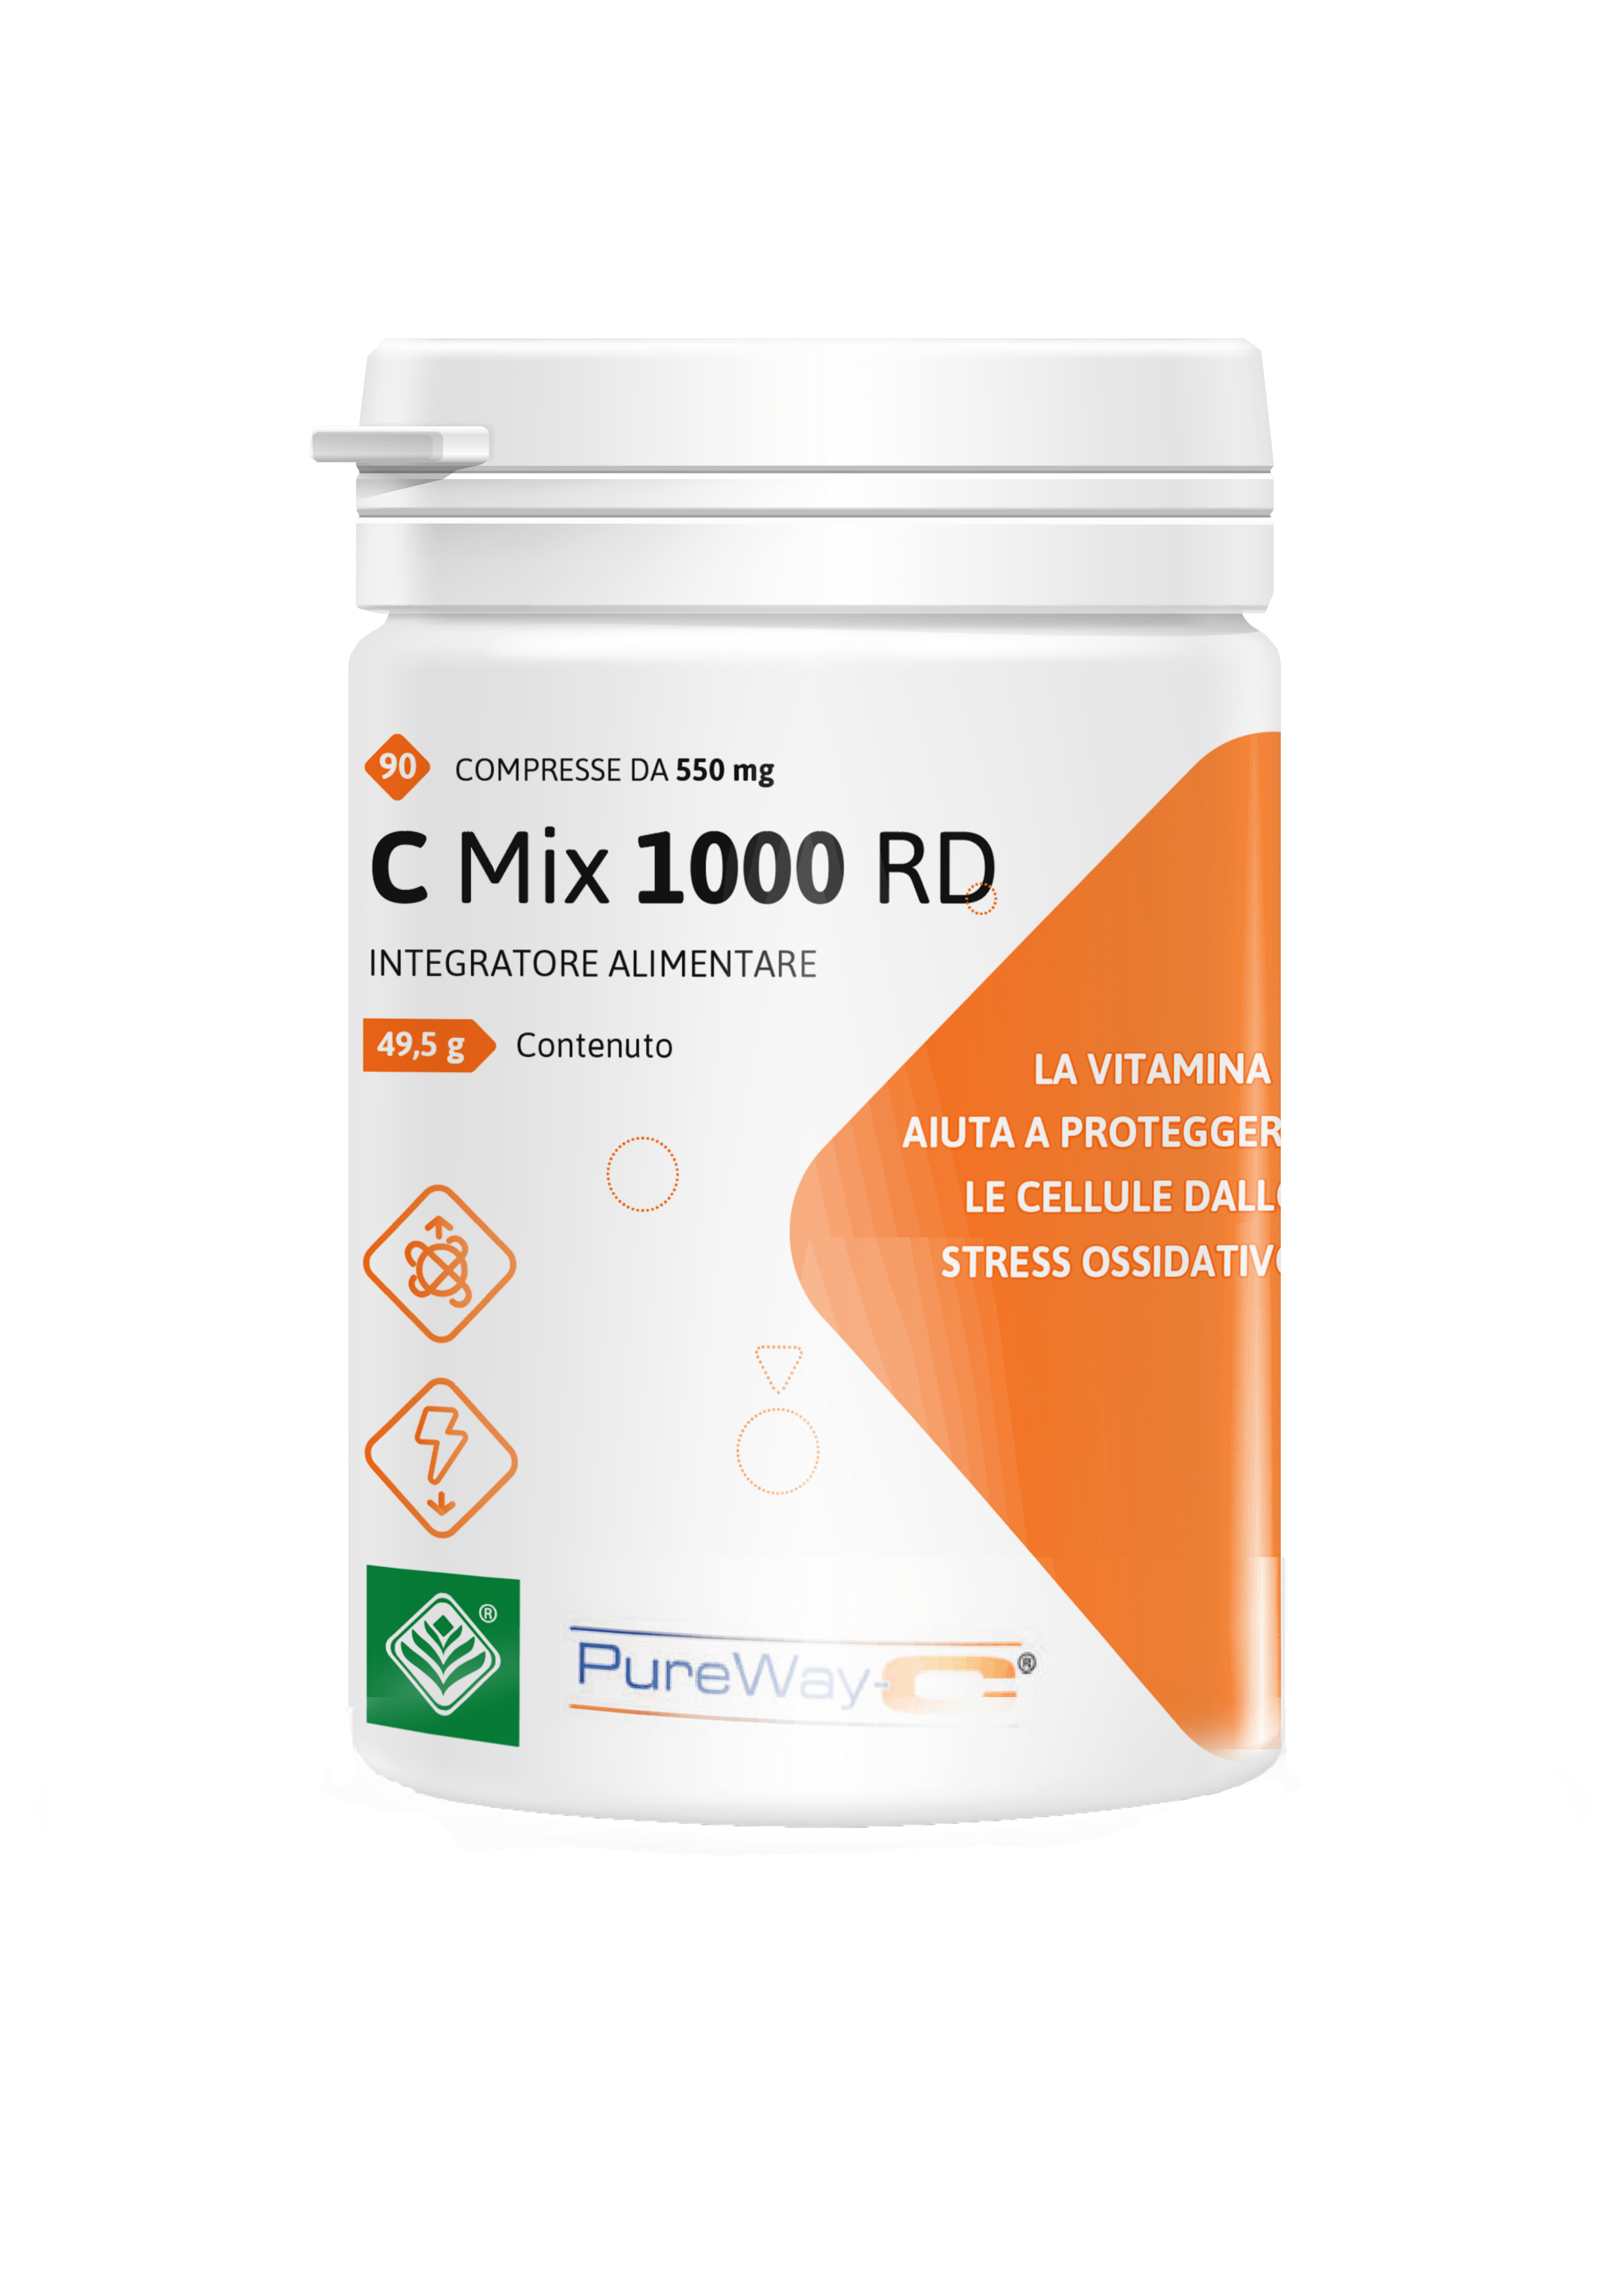 C mix 1000 RD